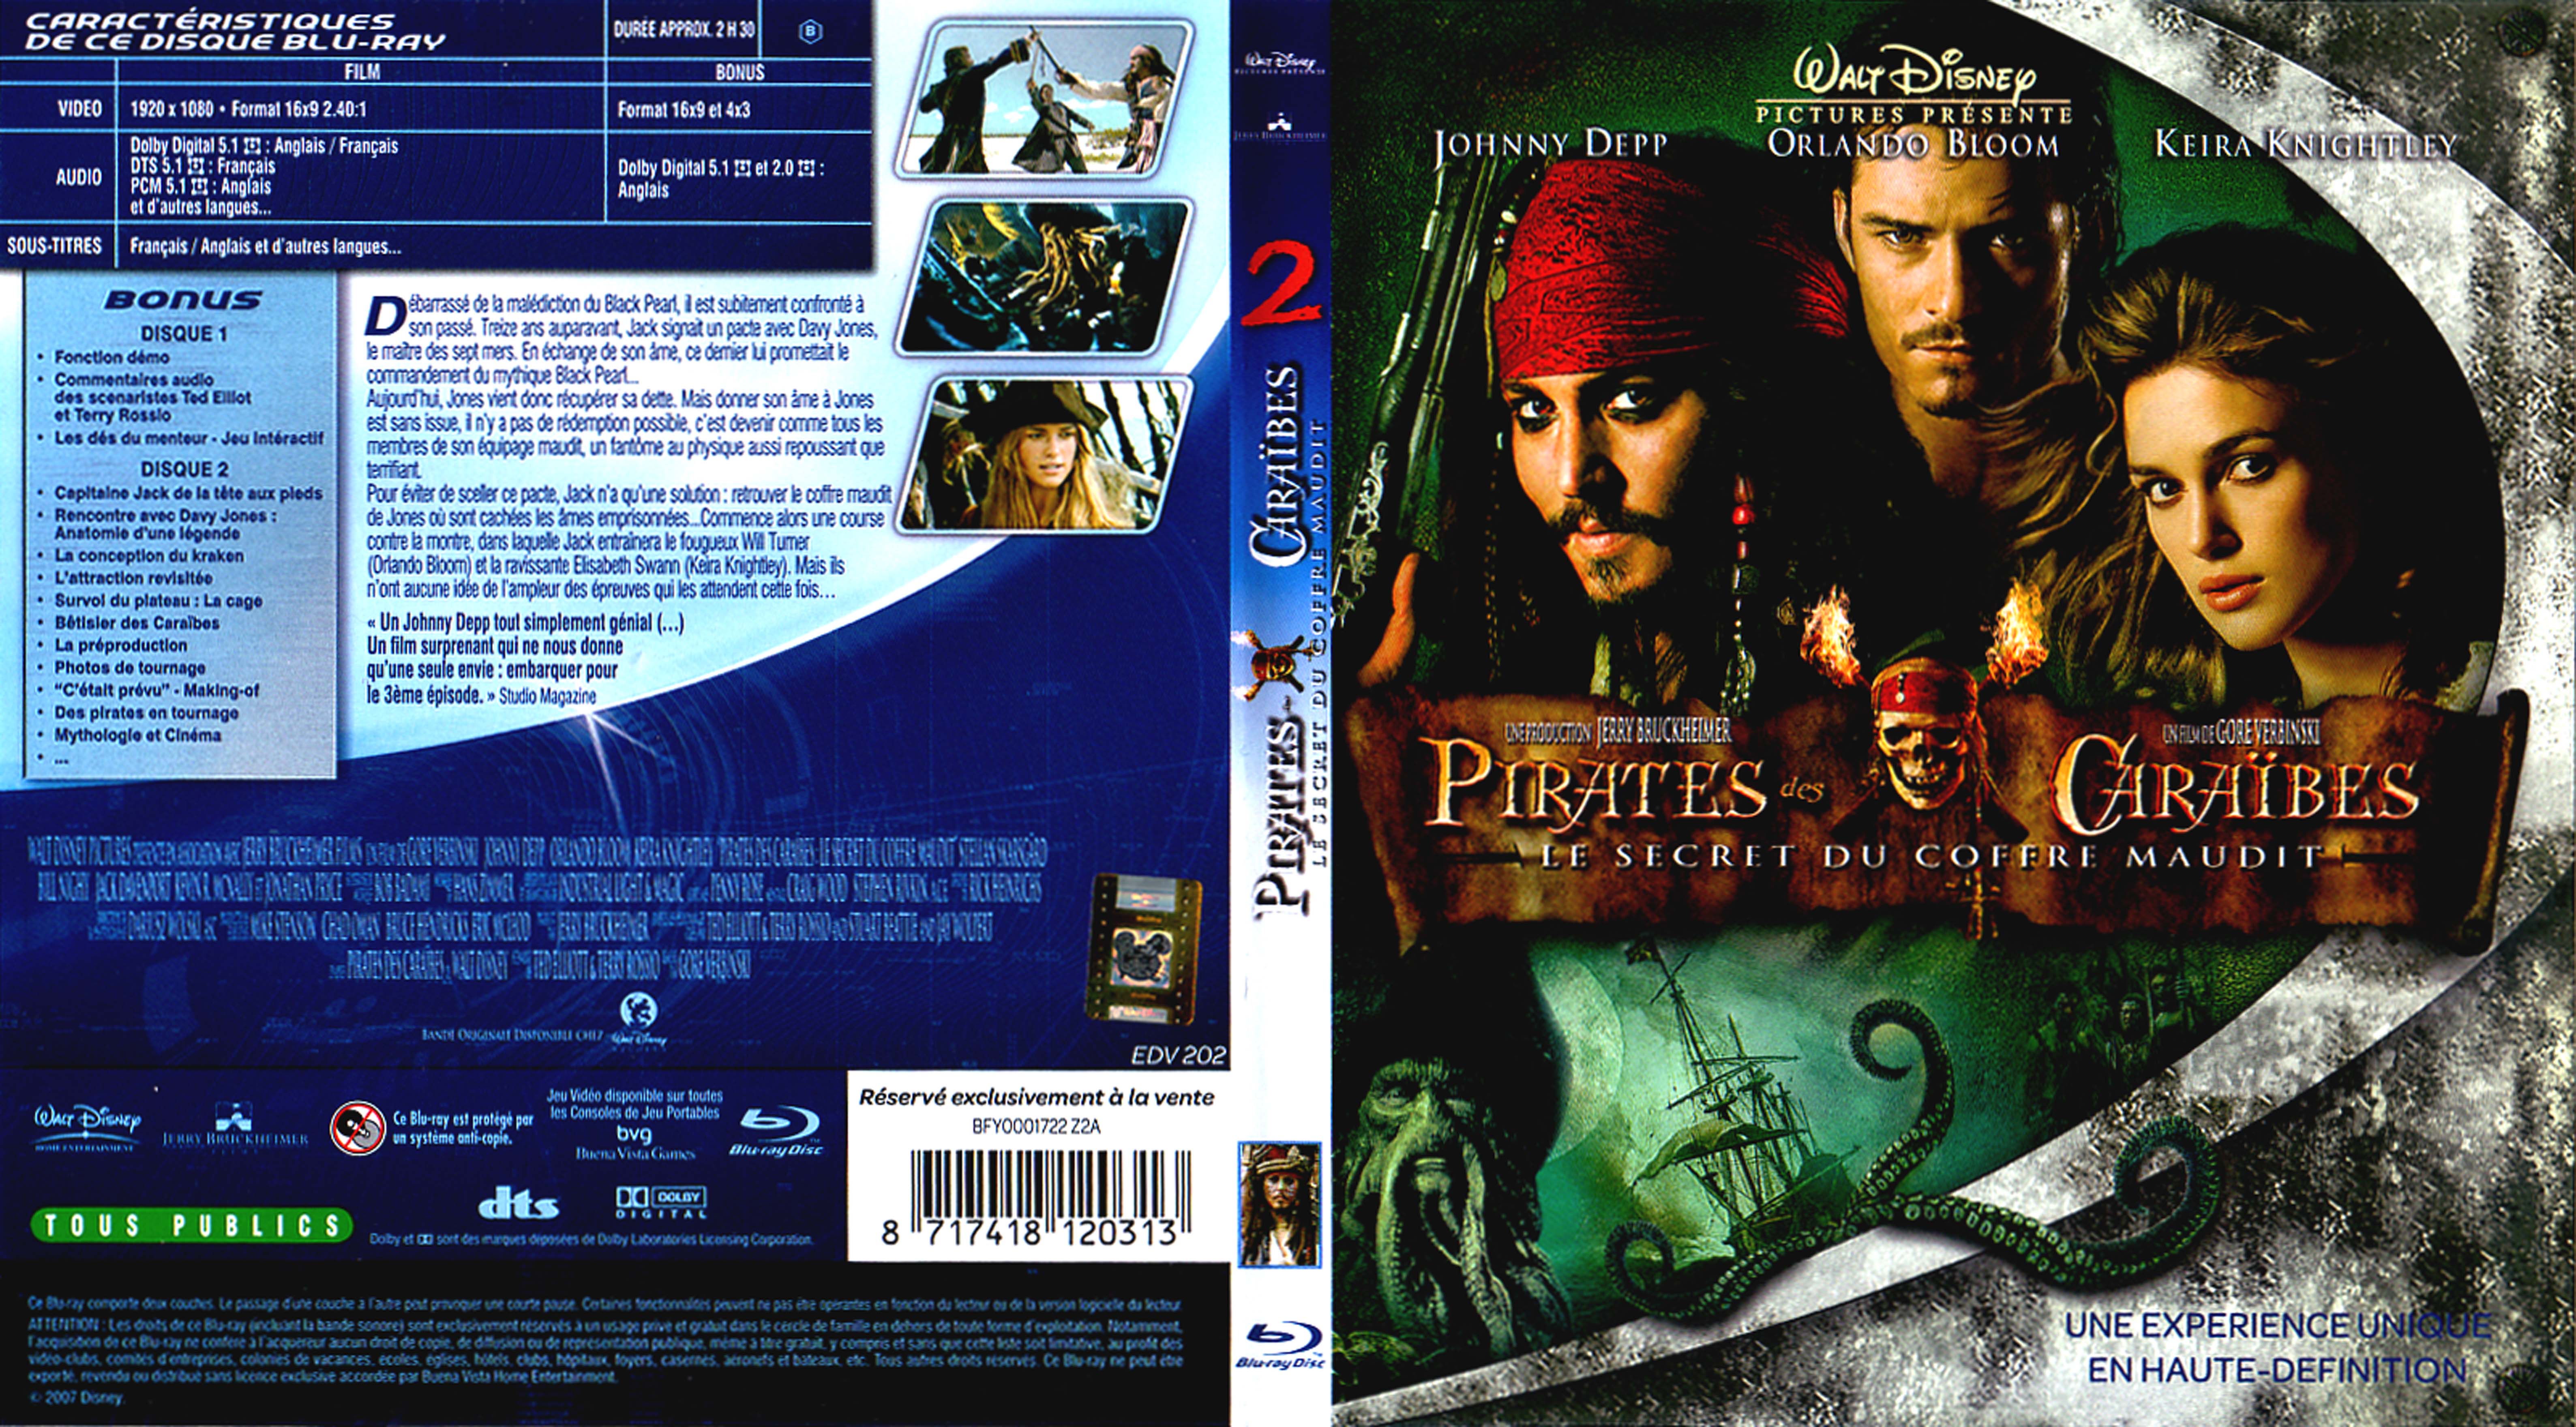 Jaquette DVD Pirates des Caraibes 2 (BLU-RAY) v4